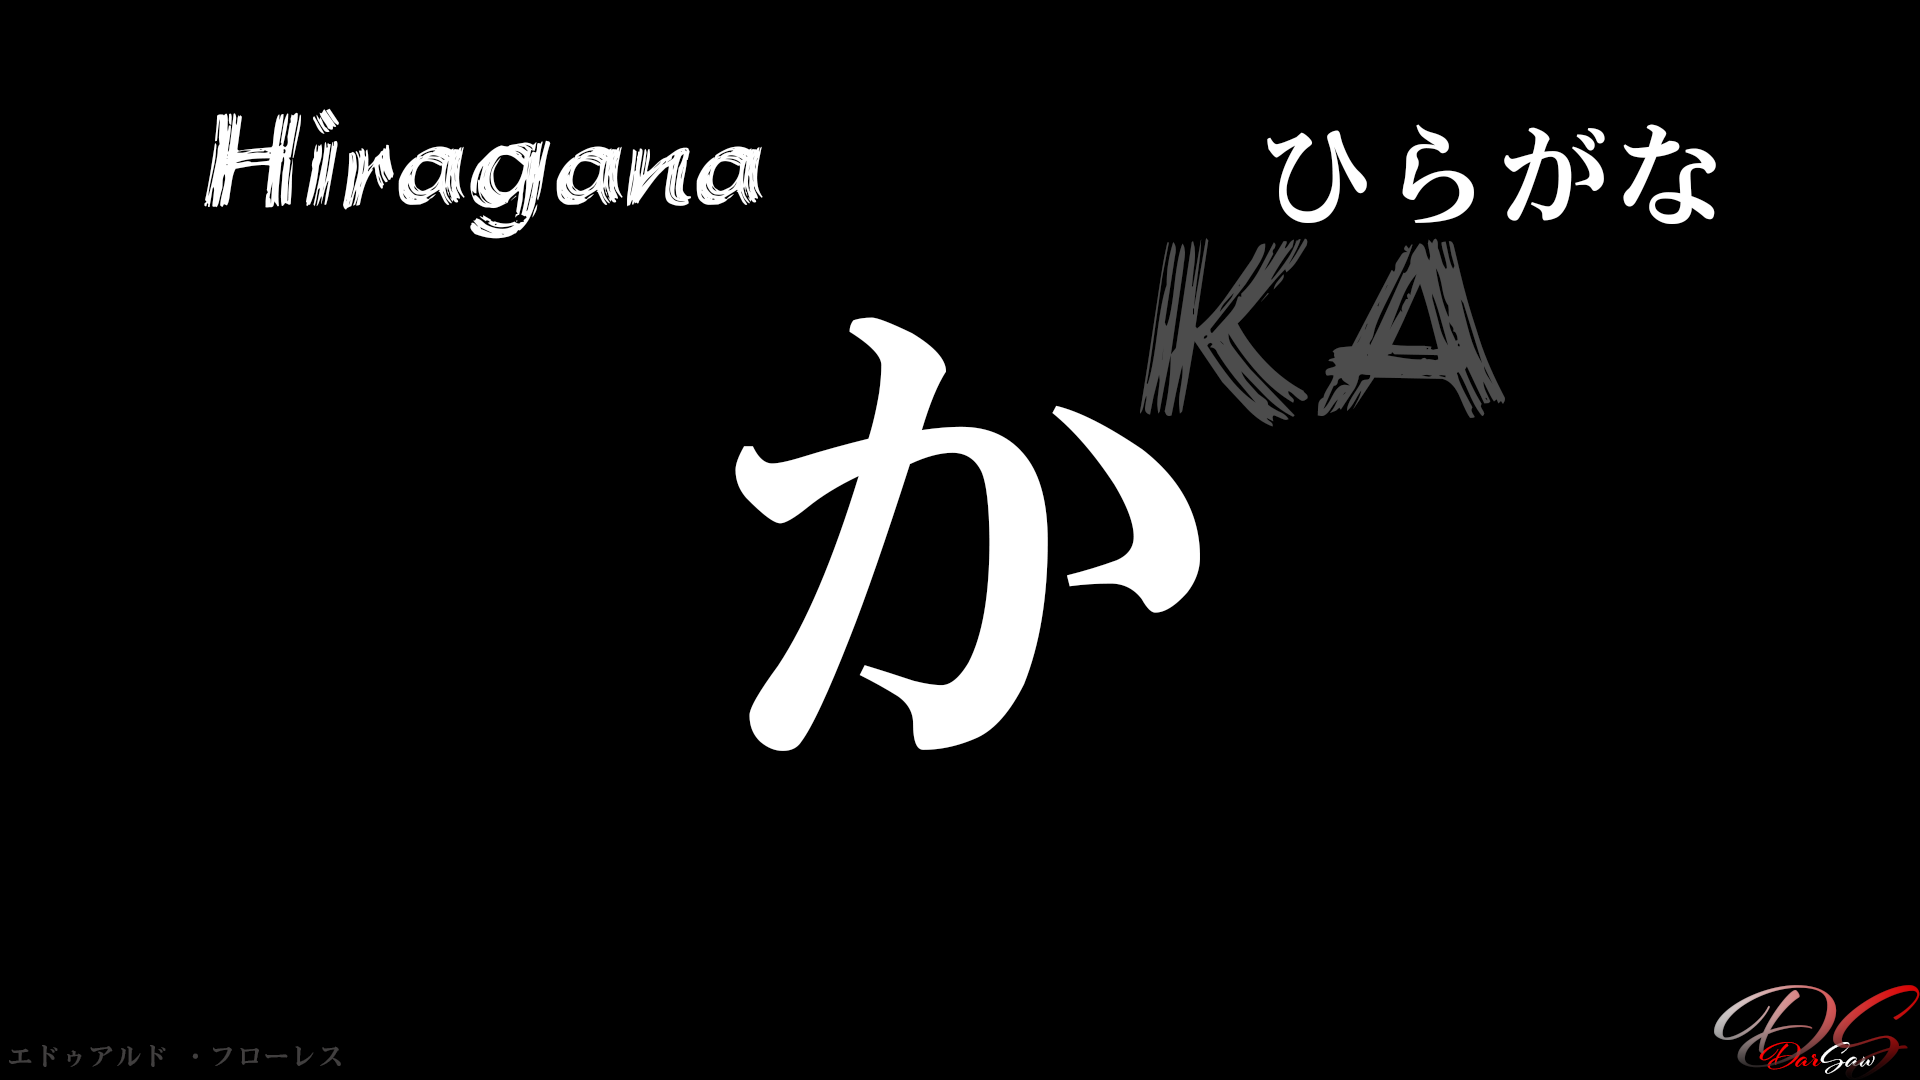 Hiragana Typography Kanji 1920x1080